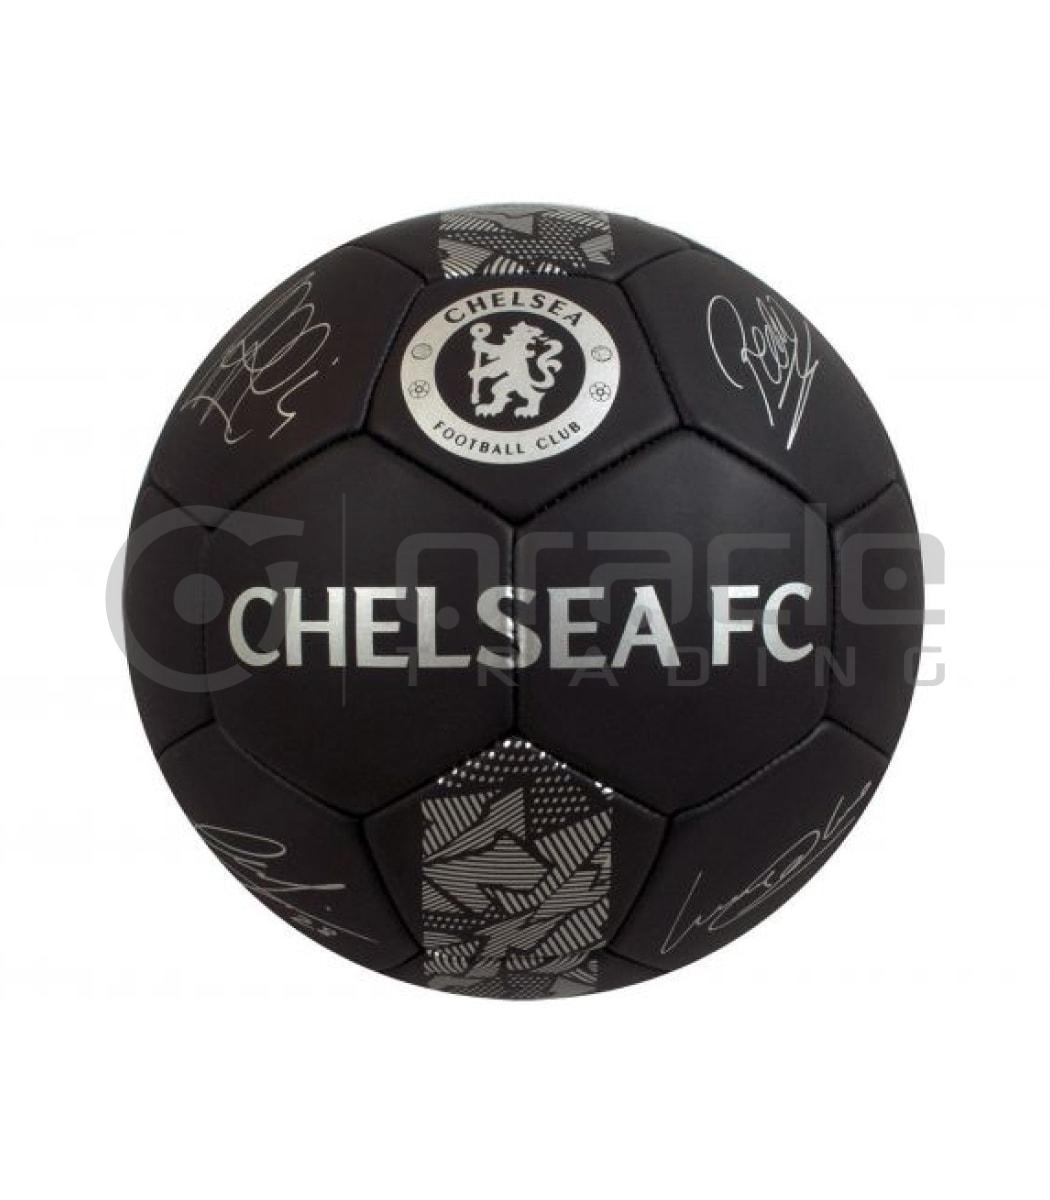 Chelsea Large Soccer Ball - Signature